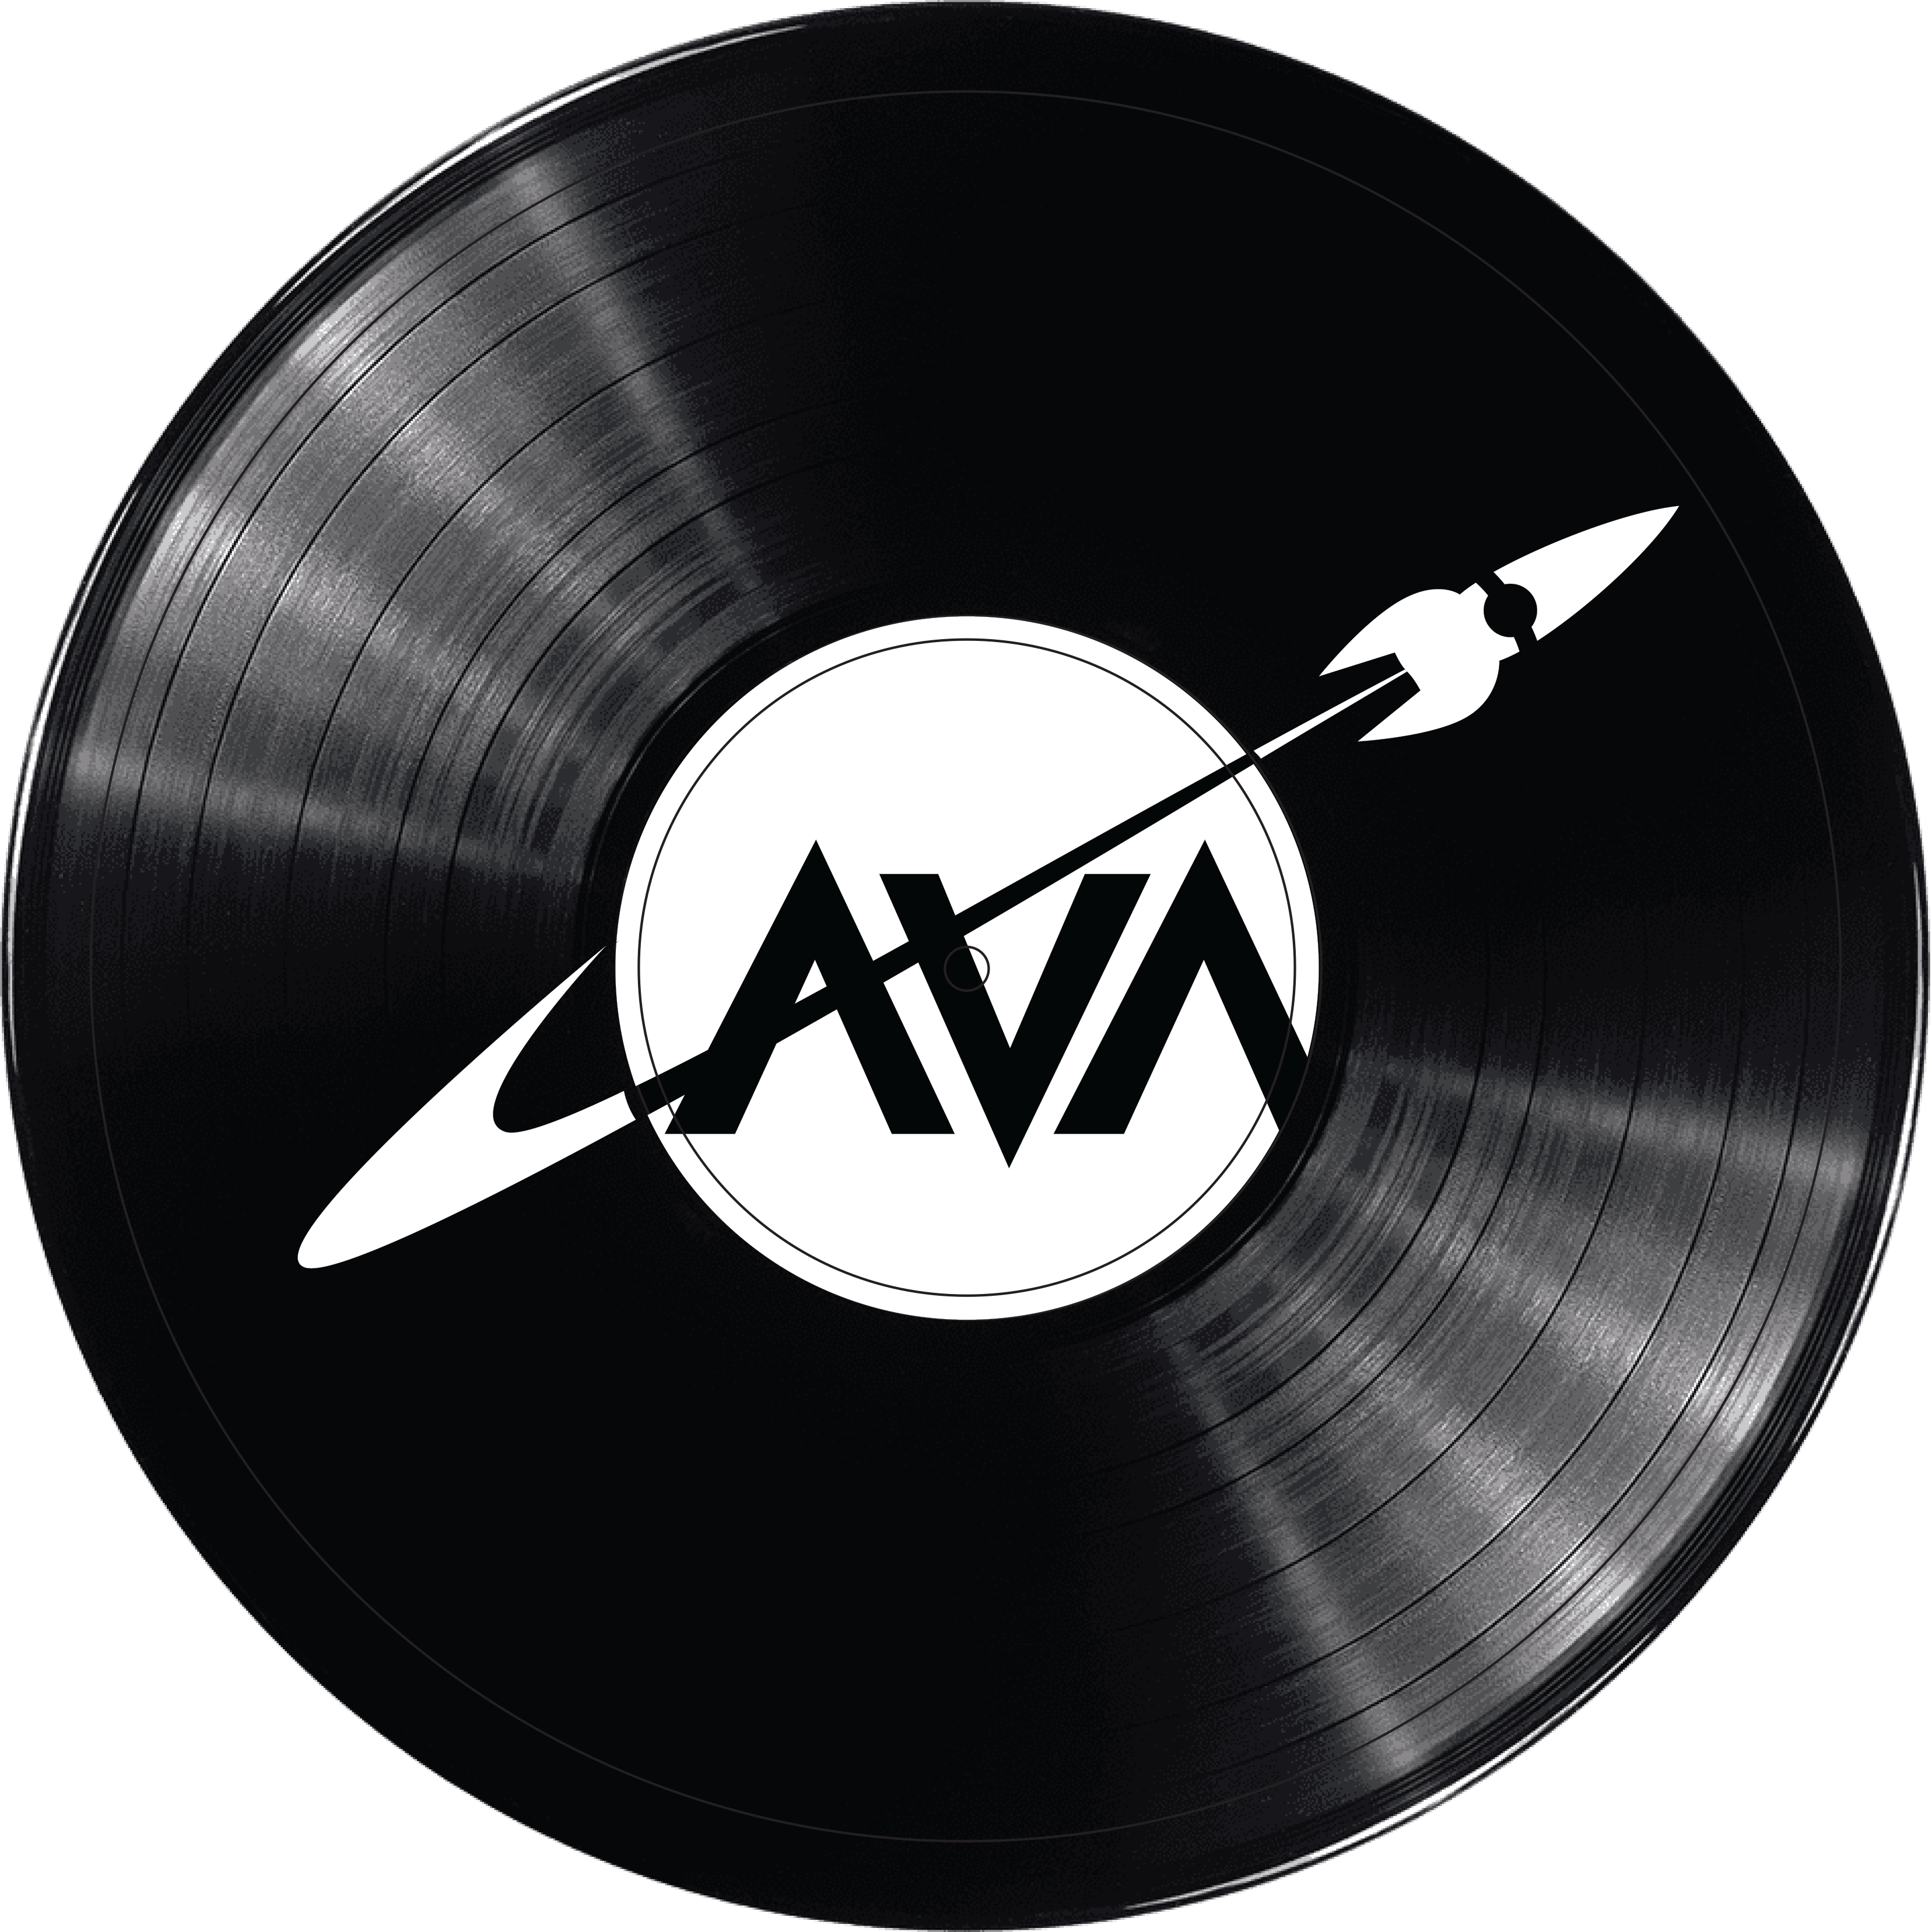 Tool – Carved Vinyl Record Art Decor – Astro Vinyl Art